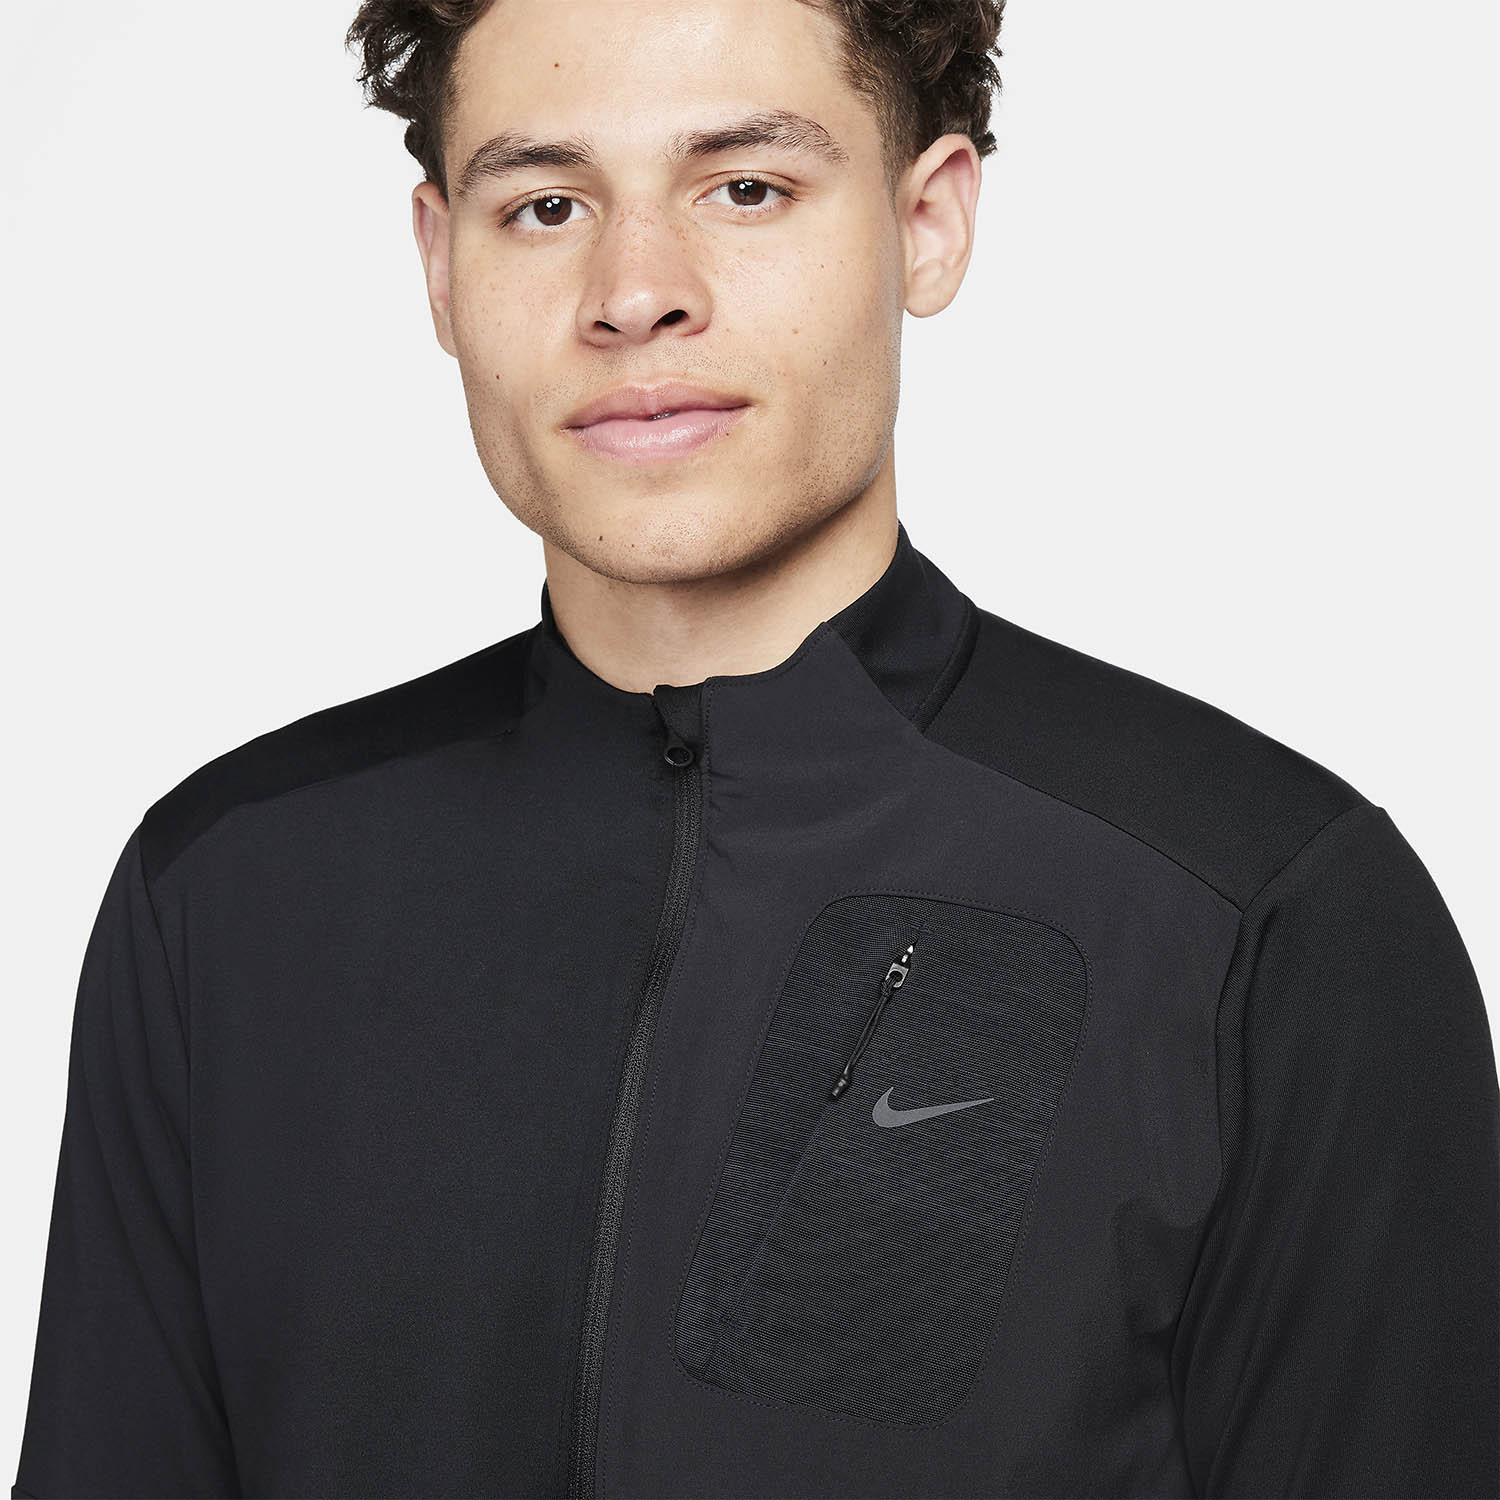 Nike Dri-FIT Element Camisa - Black/Black Reflective